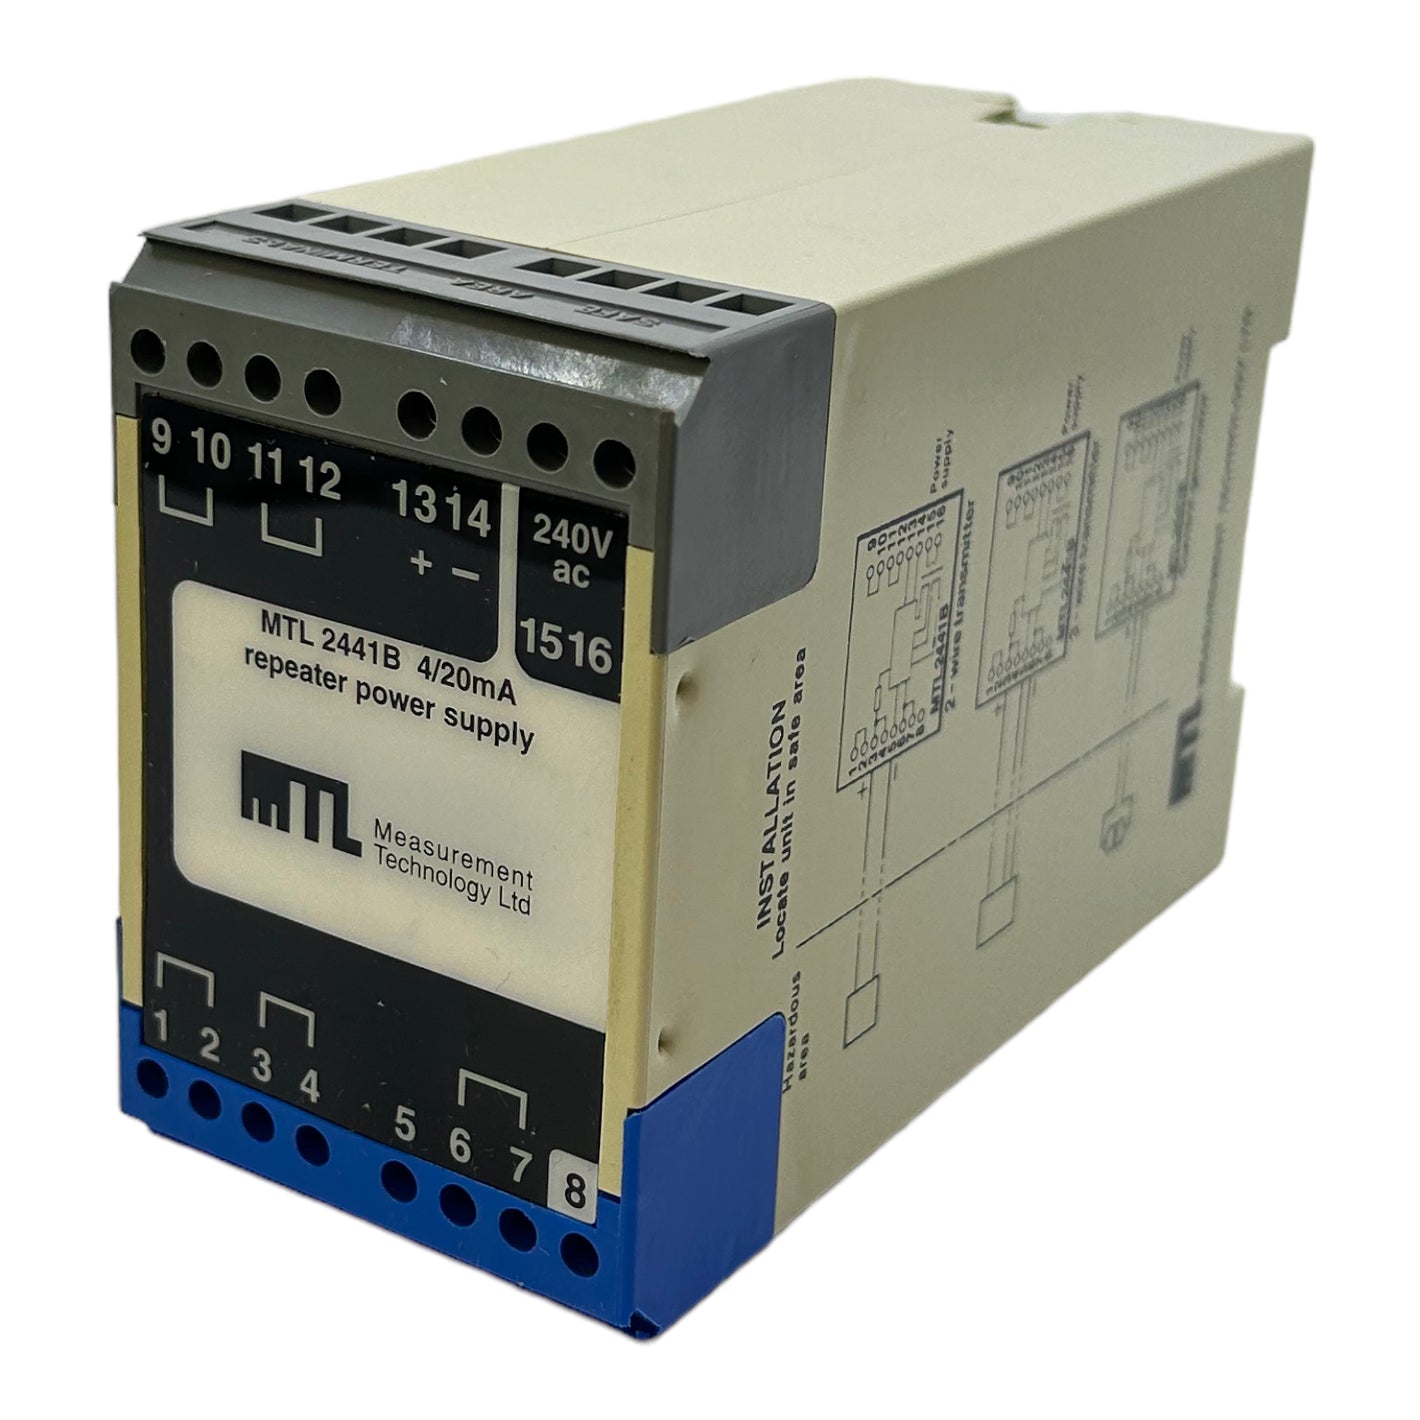 Eaton MTL2441B power supply power supply repeater 240V AC 4/20mA 